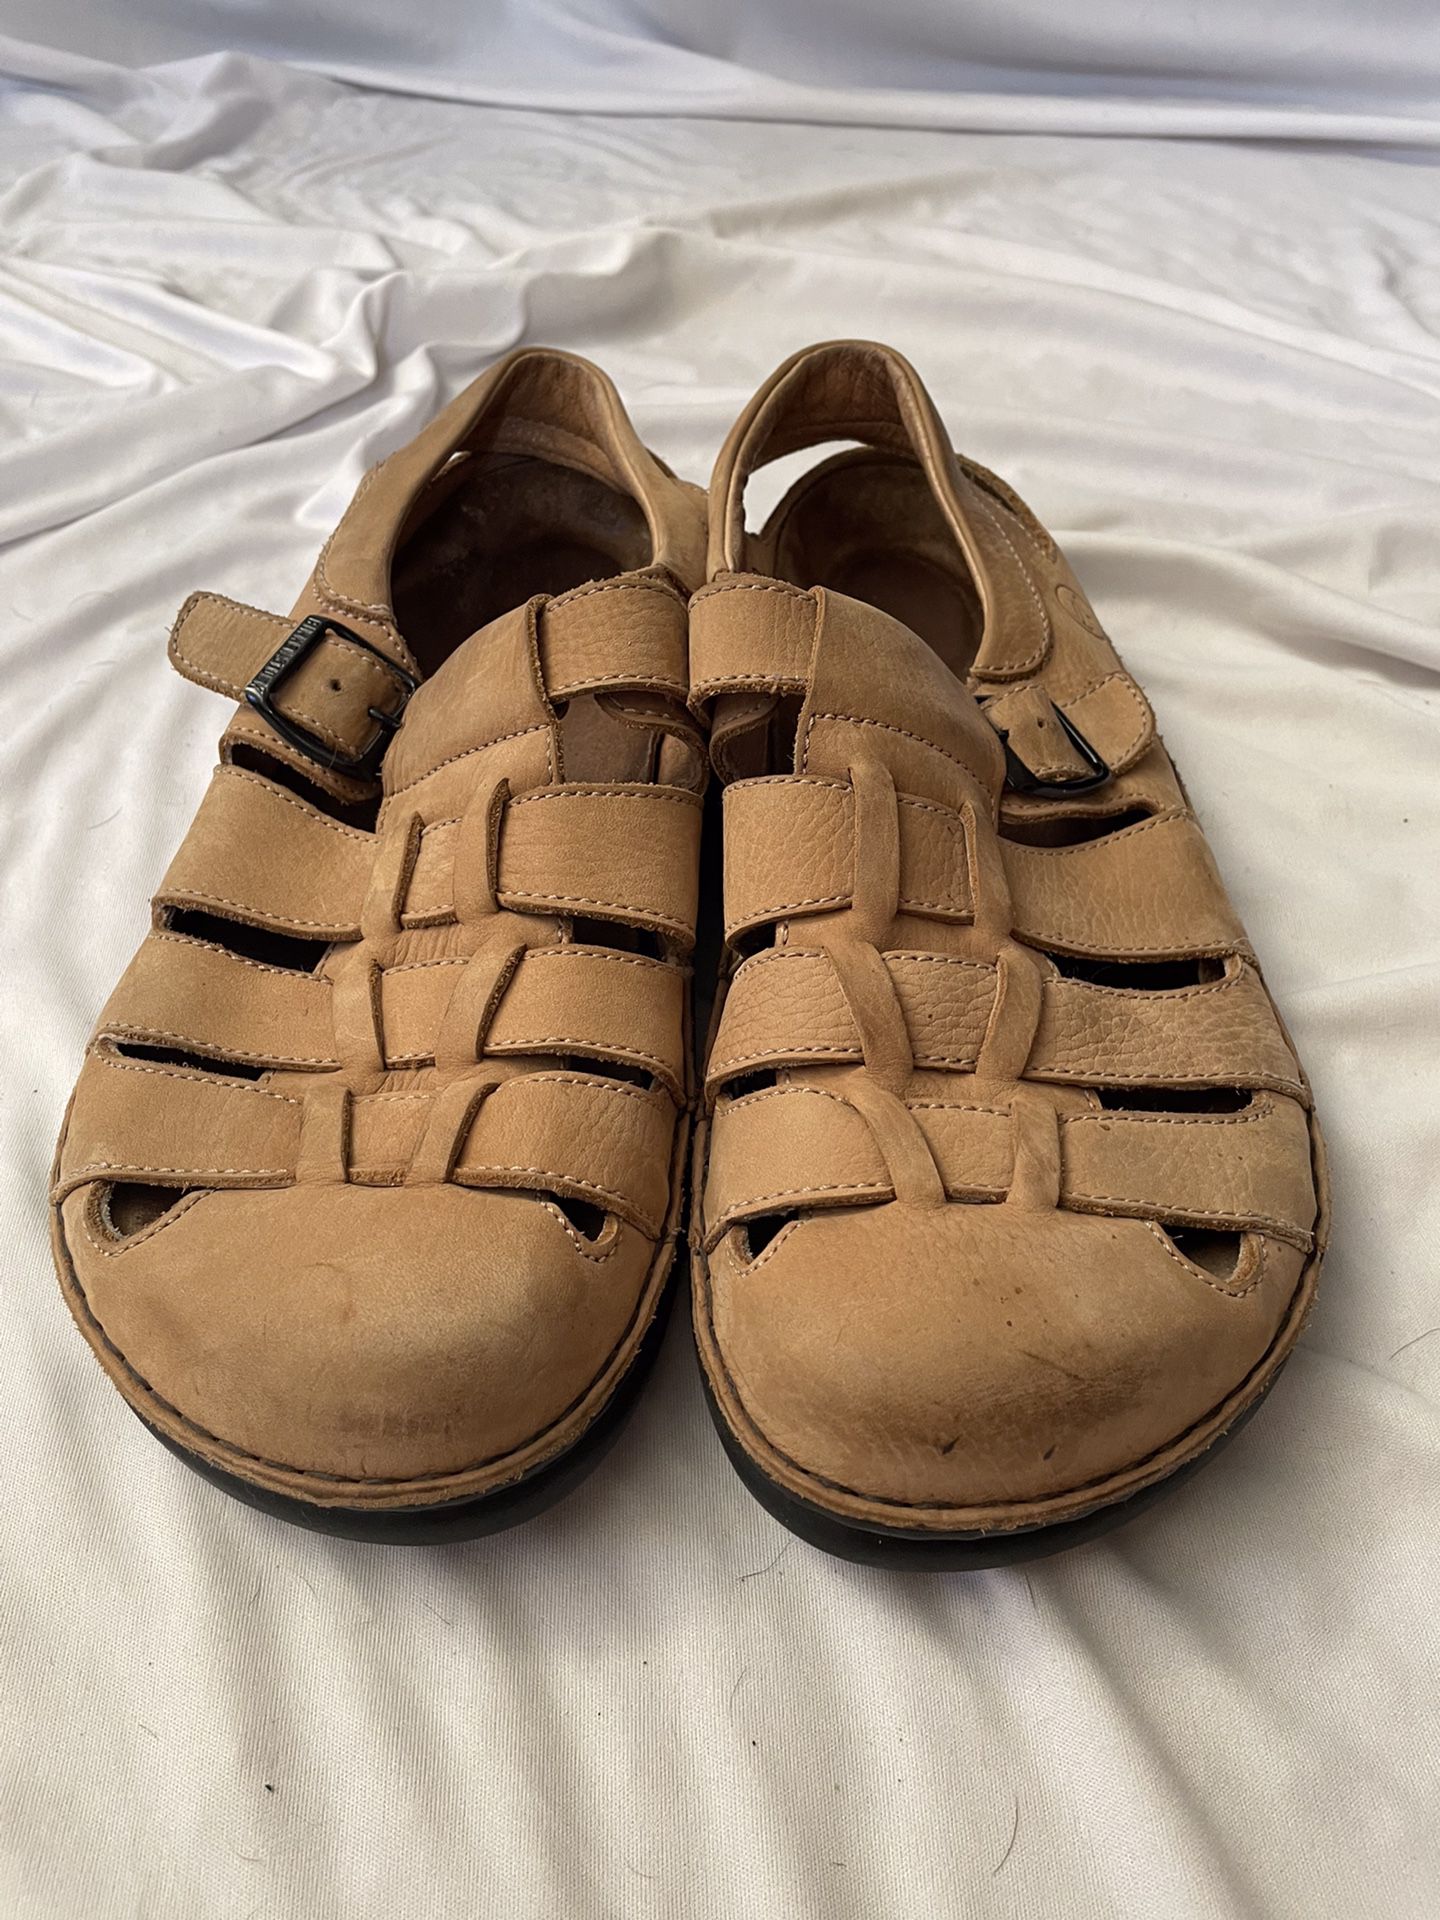 NEW Men's Birkenstock Sandals - SIZE 13 for Sale in Las Vegas, NV - OfferUp